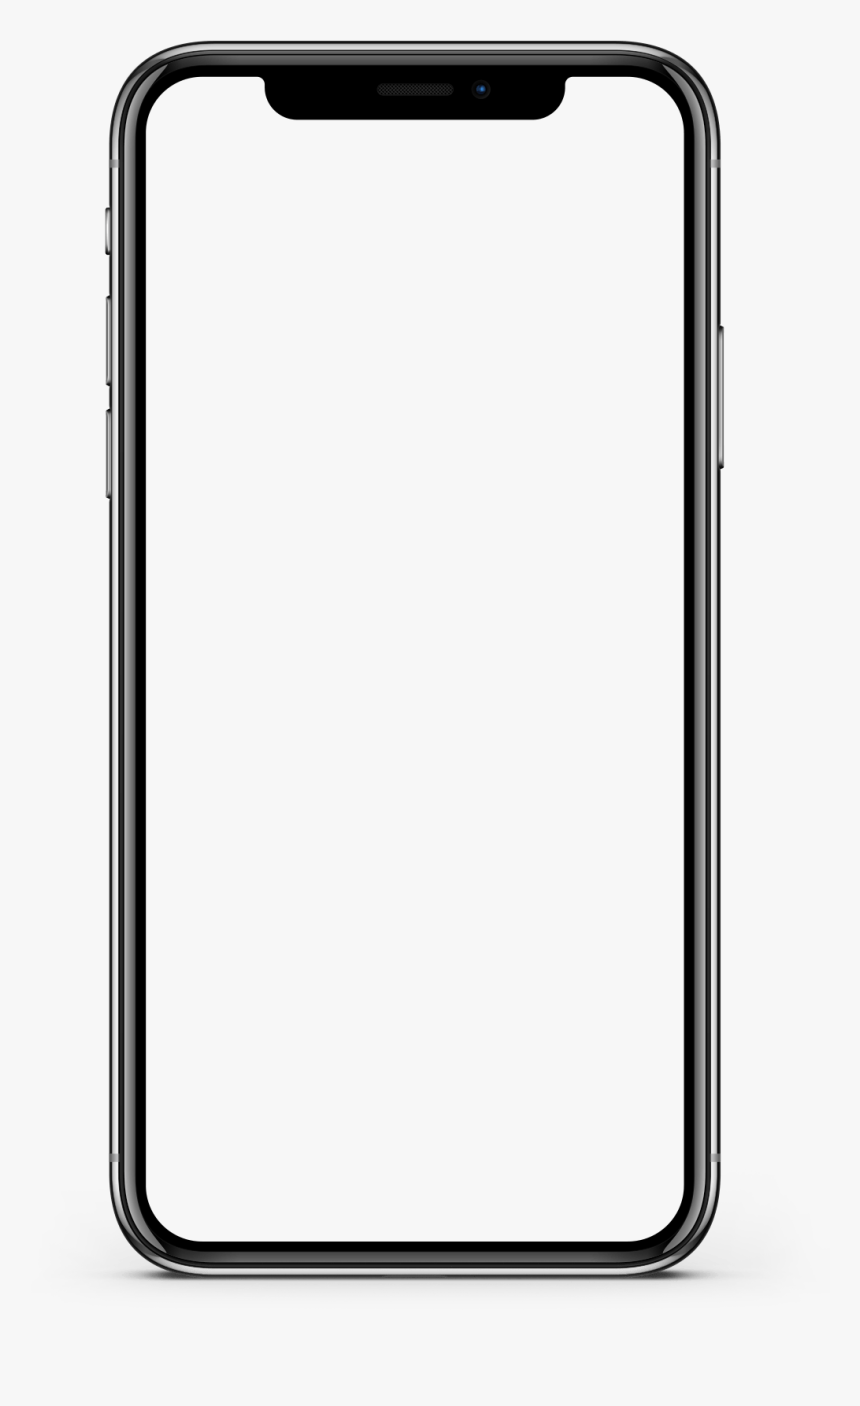 Iphone X Screen Mockup - Transpa